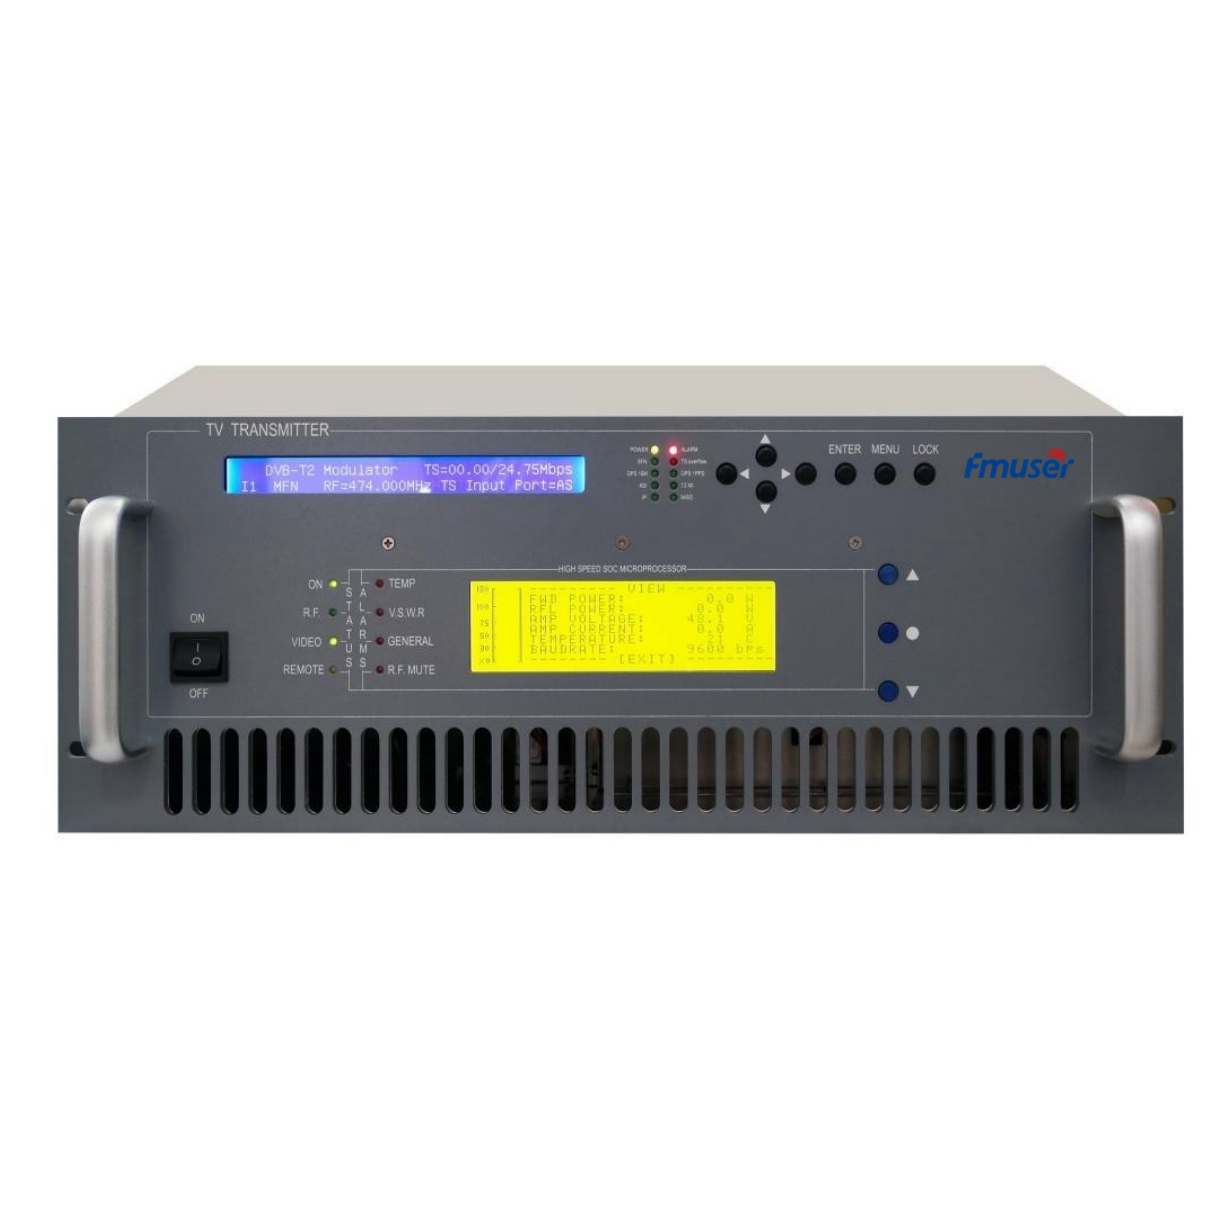 FMUSER FU518D-100W 100Watt VHF / UHF Թվային հեռուստատեսային տարածքային հեռարձակում հաղորդիչ Հեռուստատեսություն Numerique Terrestre TNT (DVB-T / ATSC / ISDB-T) պրոֆեսիոնալ հեռուստաընկերության համար